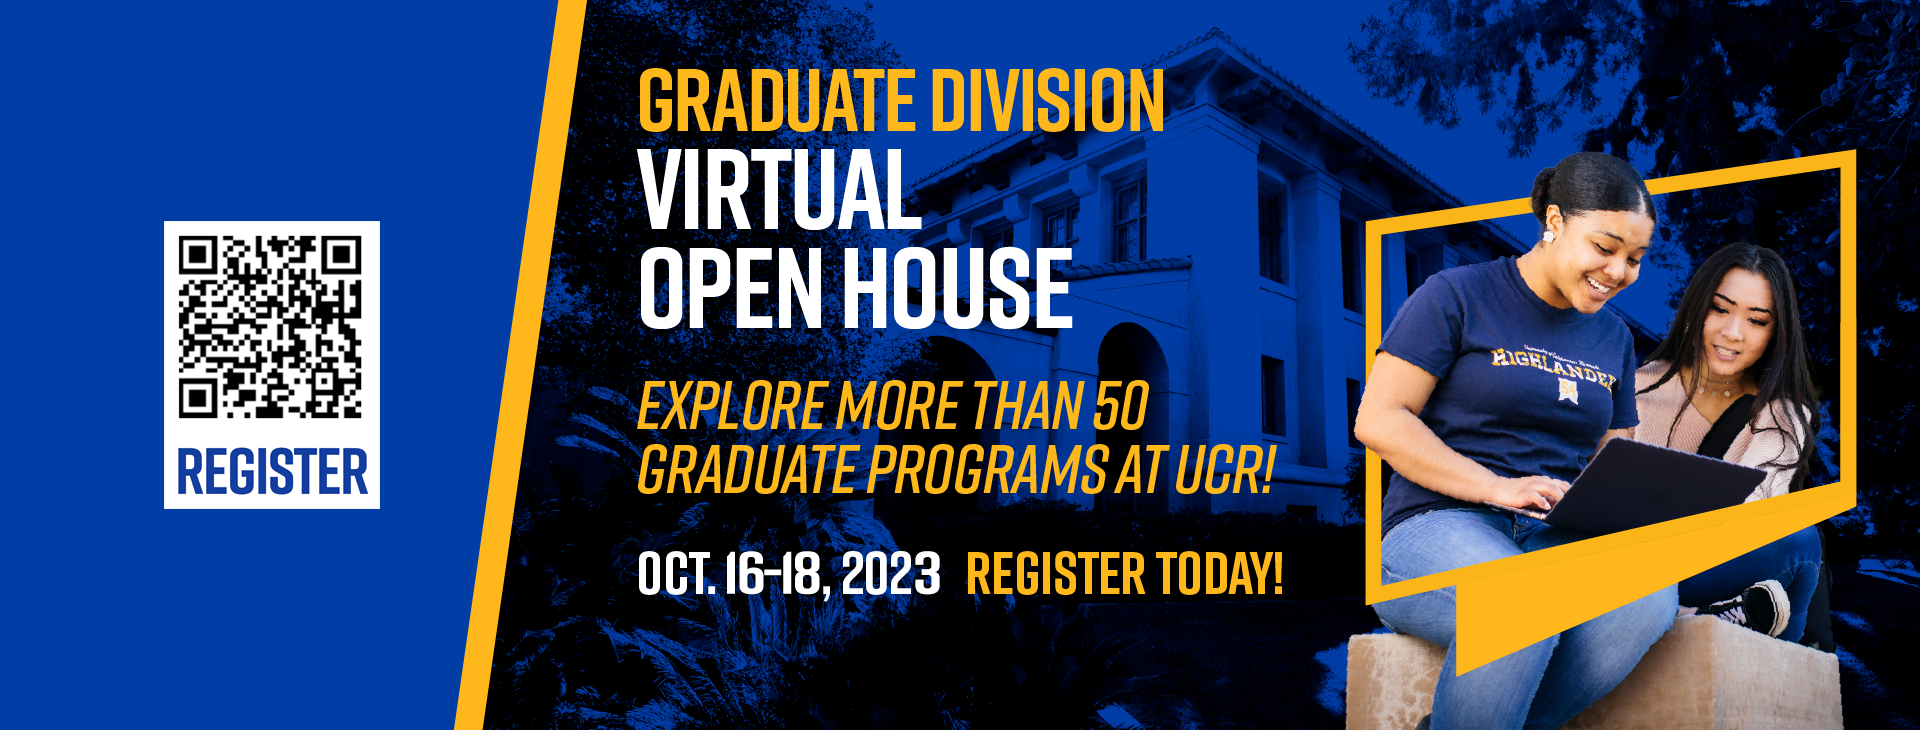 Grad div virtual open house